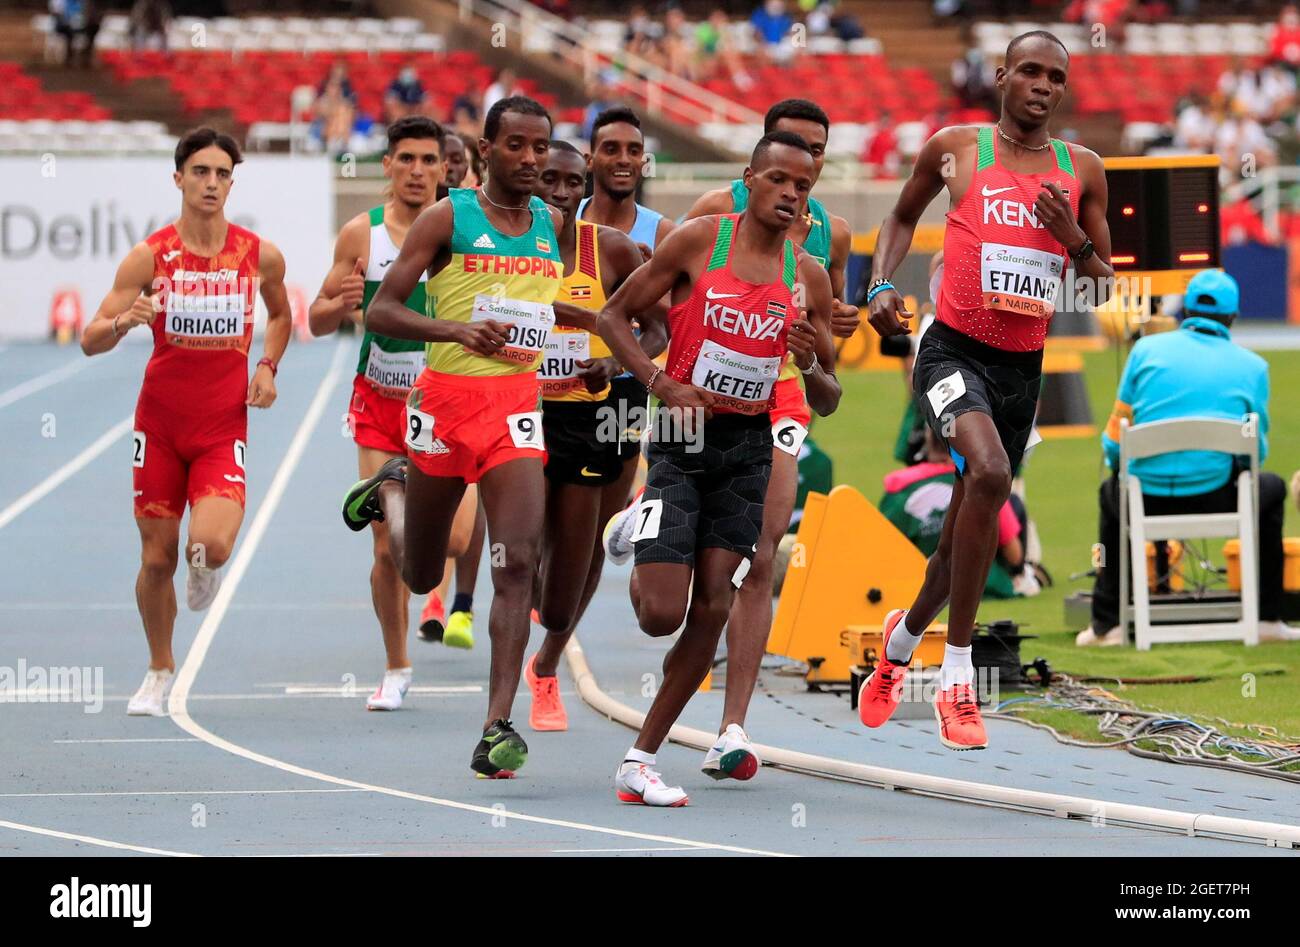 Athletics - 2021 World Athletics U20 Championships - Athletes compete in the Men's 1500m final - Kasarani Stadium, Nairobi, Kenya - August 21, 2021. REUTERS/Thomas Mukoya Stock Photo